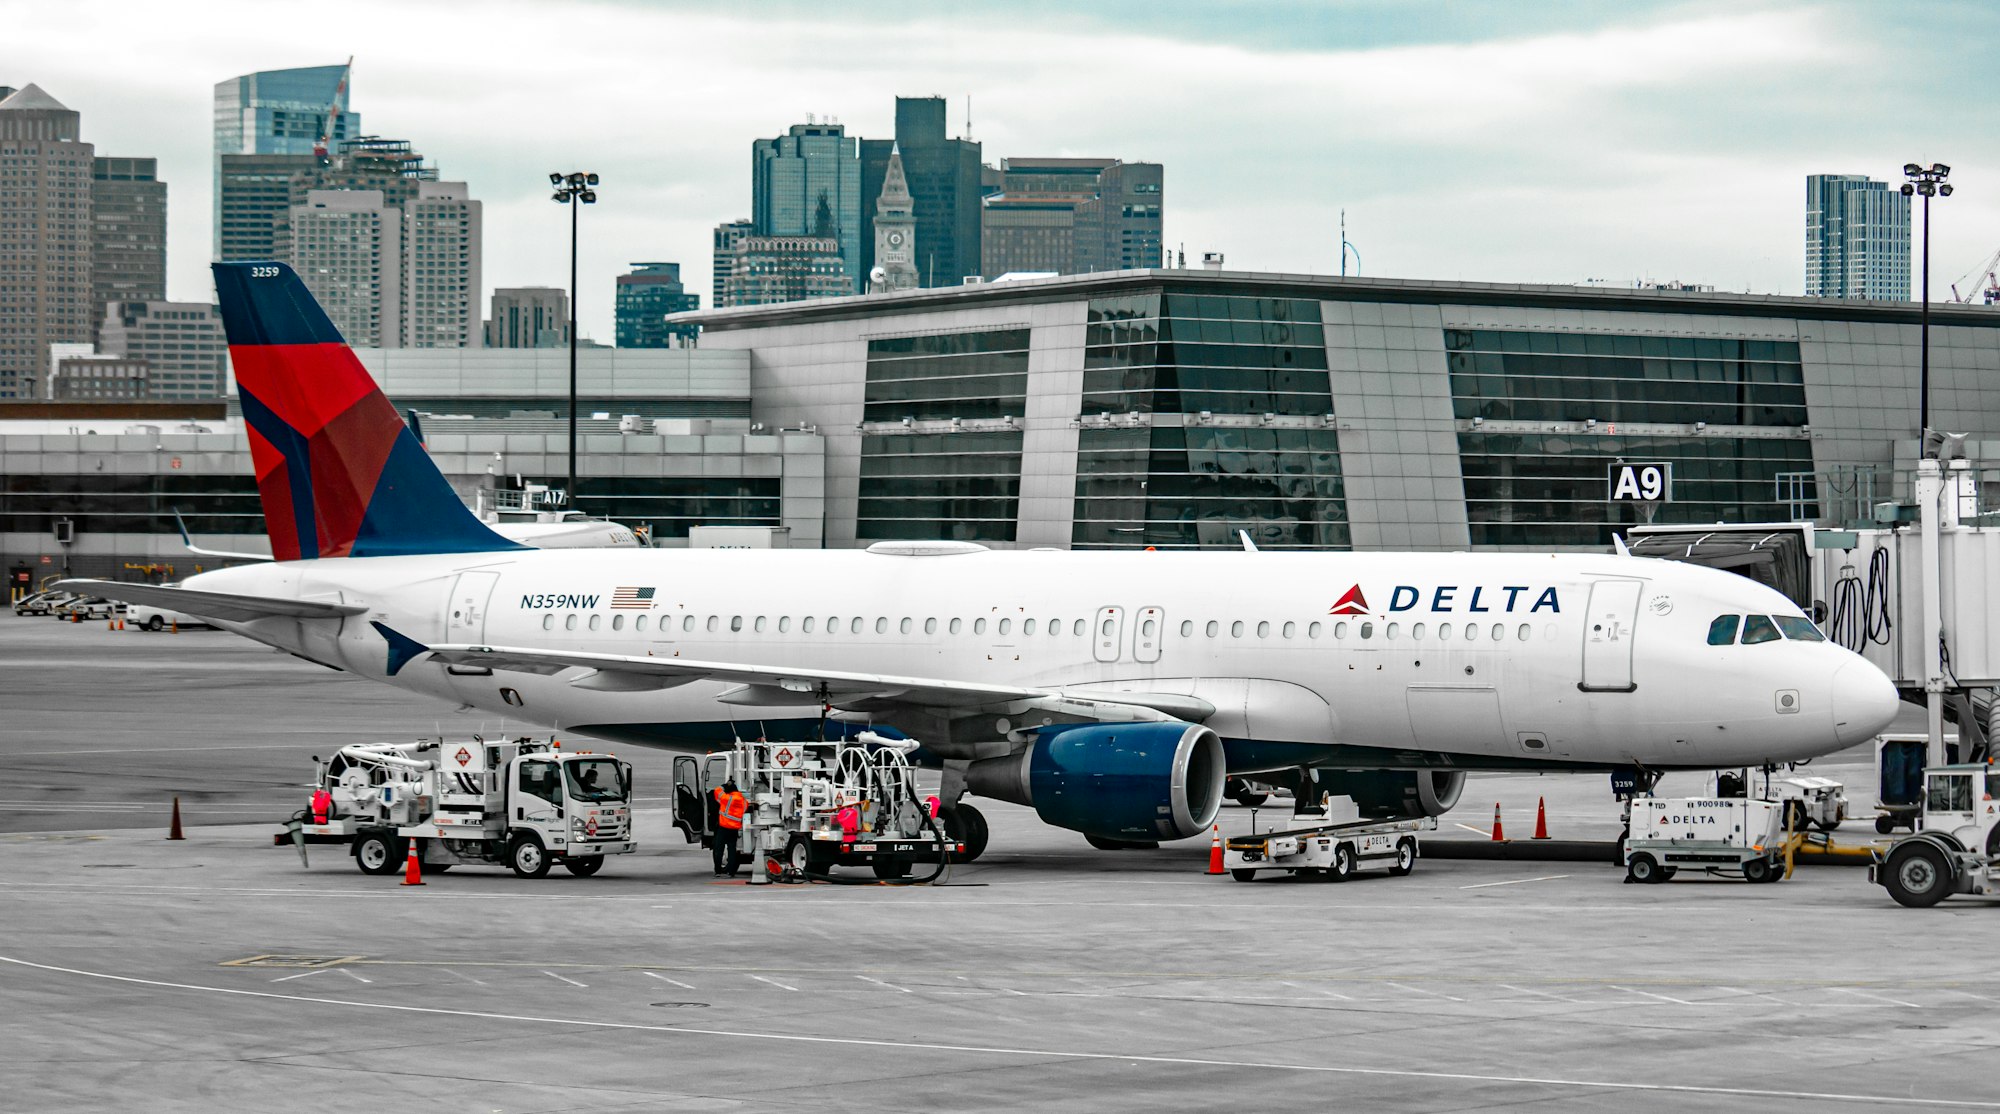 Delta Air Lines Champions Future Aviators Through Diversity Initiatives